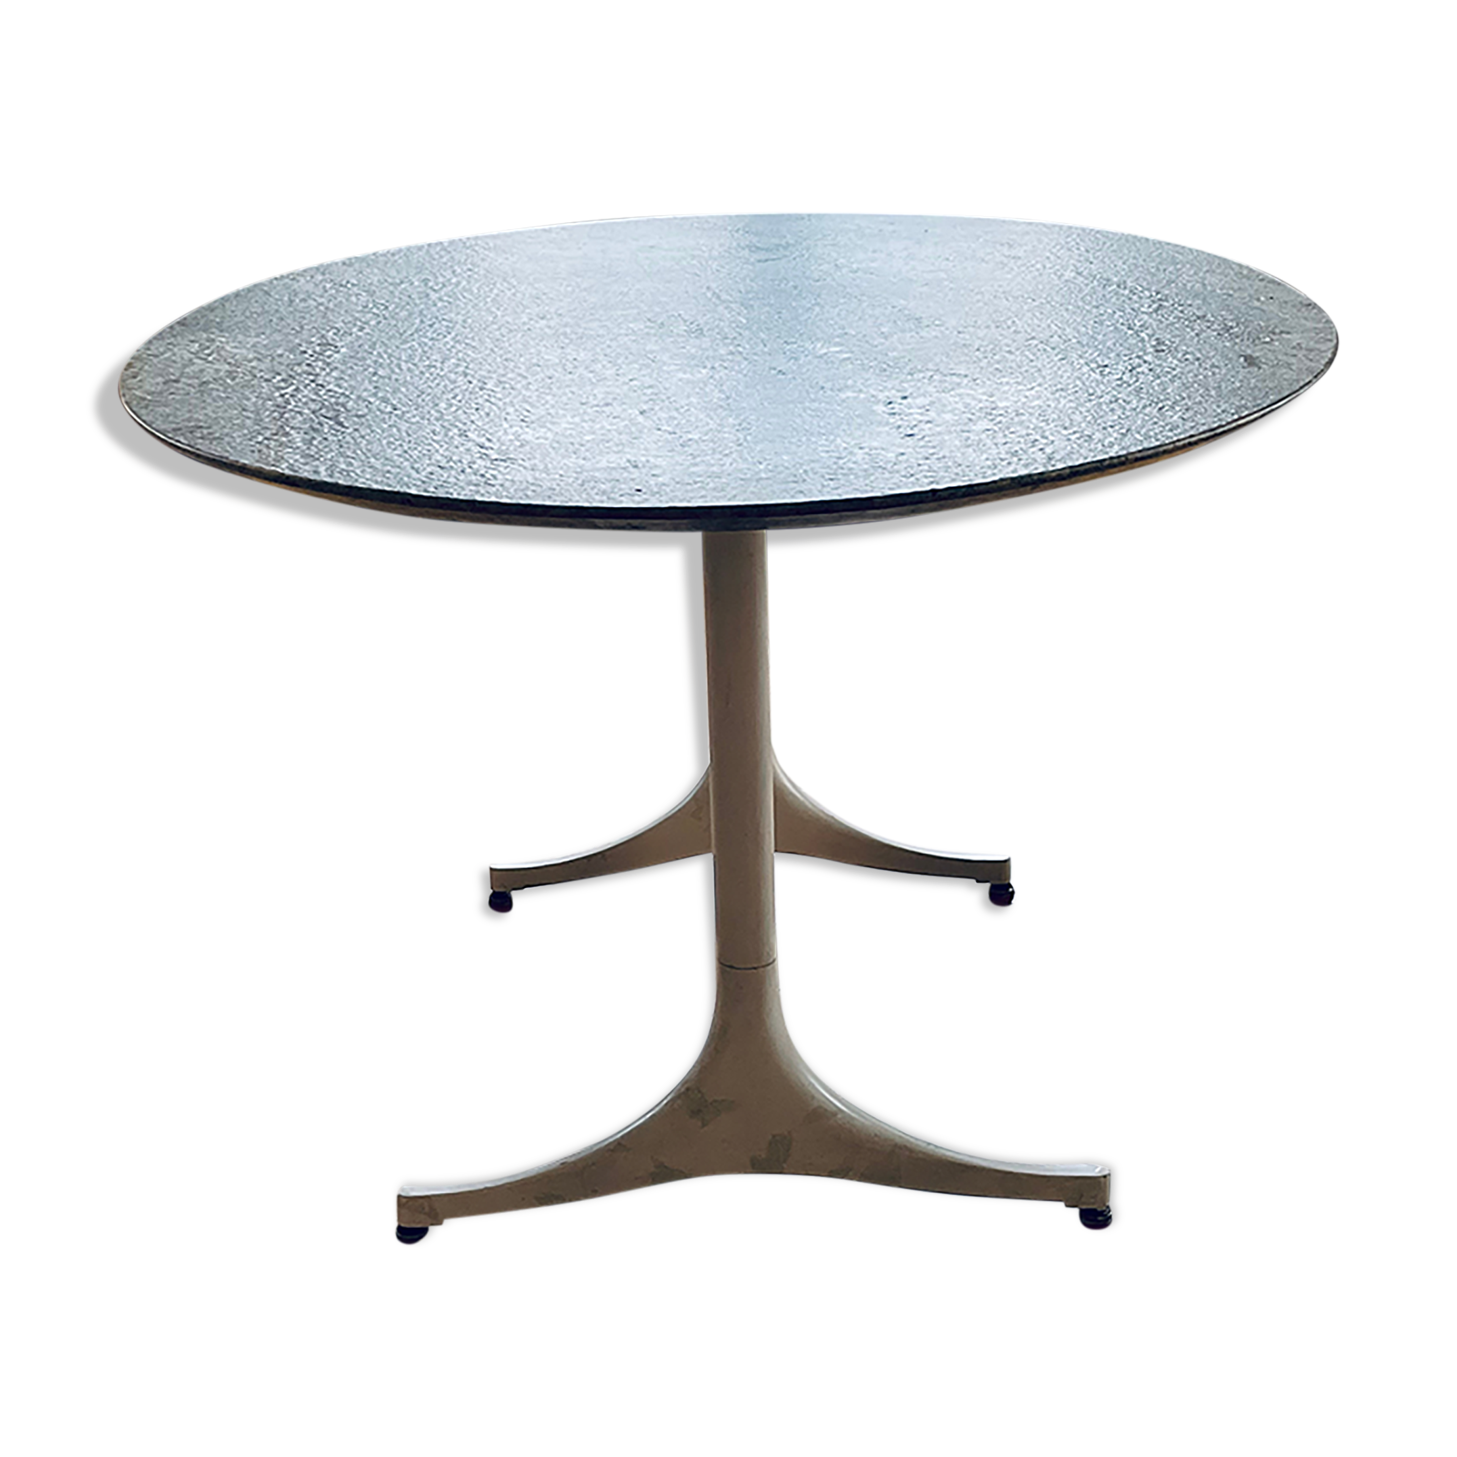 Table granit gris clair ovale design moderne